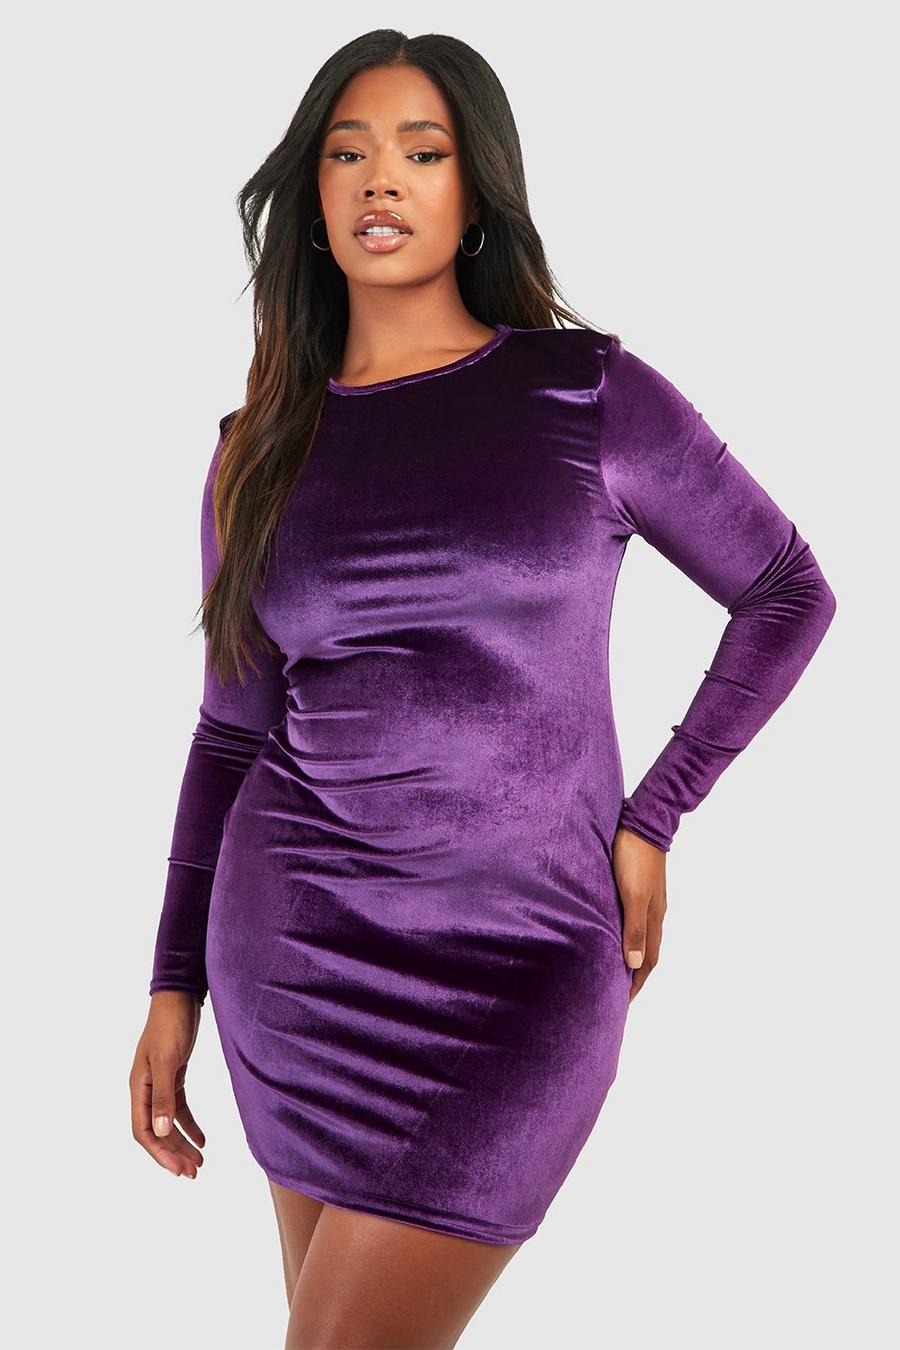 Jewel purple violet Plus Velvet Long Sleeve Mini Dress